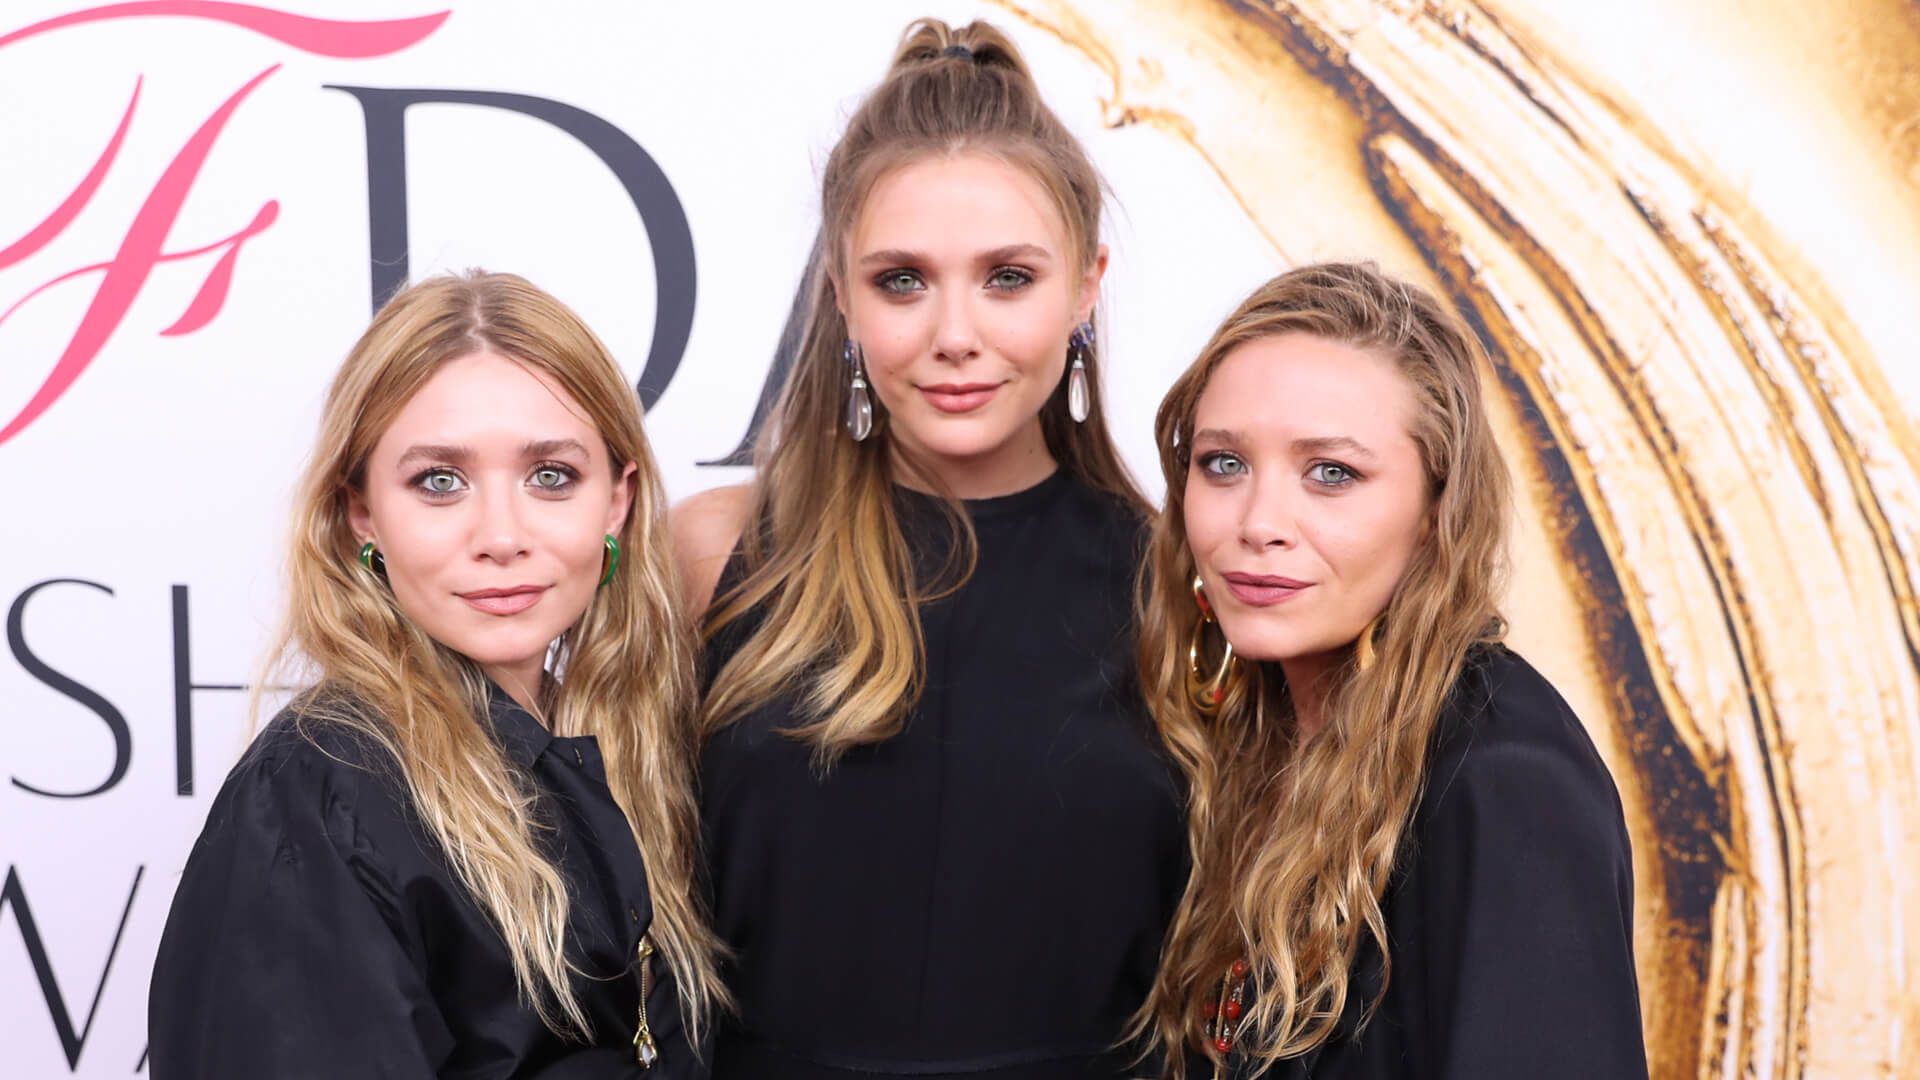 The Olsen Twins' Net Worth Passes $400M | GOBankingRates